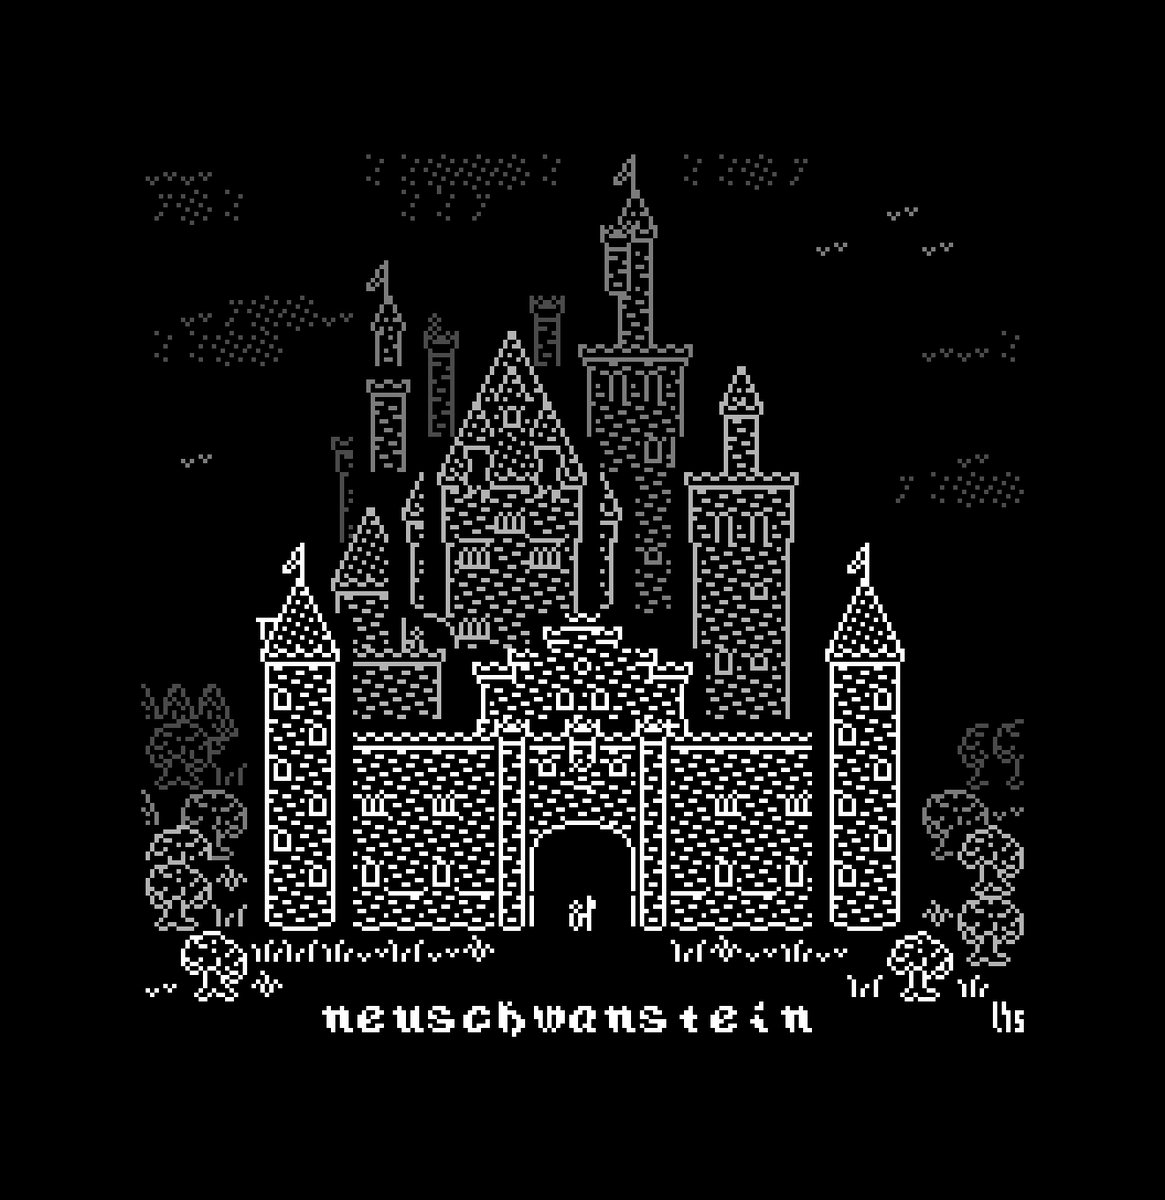 Neuschwanstein - The first castle made using Castle Kit. Link in bio

#ascii #asciiart #art #bbs #c64 #commodore64 #computer #computerart #demoscene #digital #digitalart #petscii #petsciiart #text #textart #textmode #textpunk #8bit #8bitart #custom #1bit #pixel #pixelart